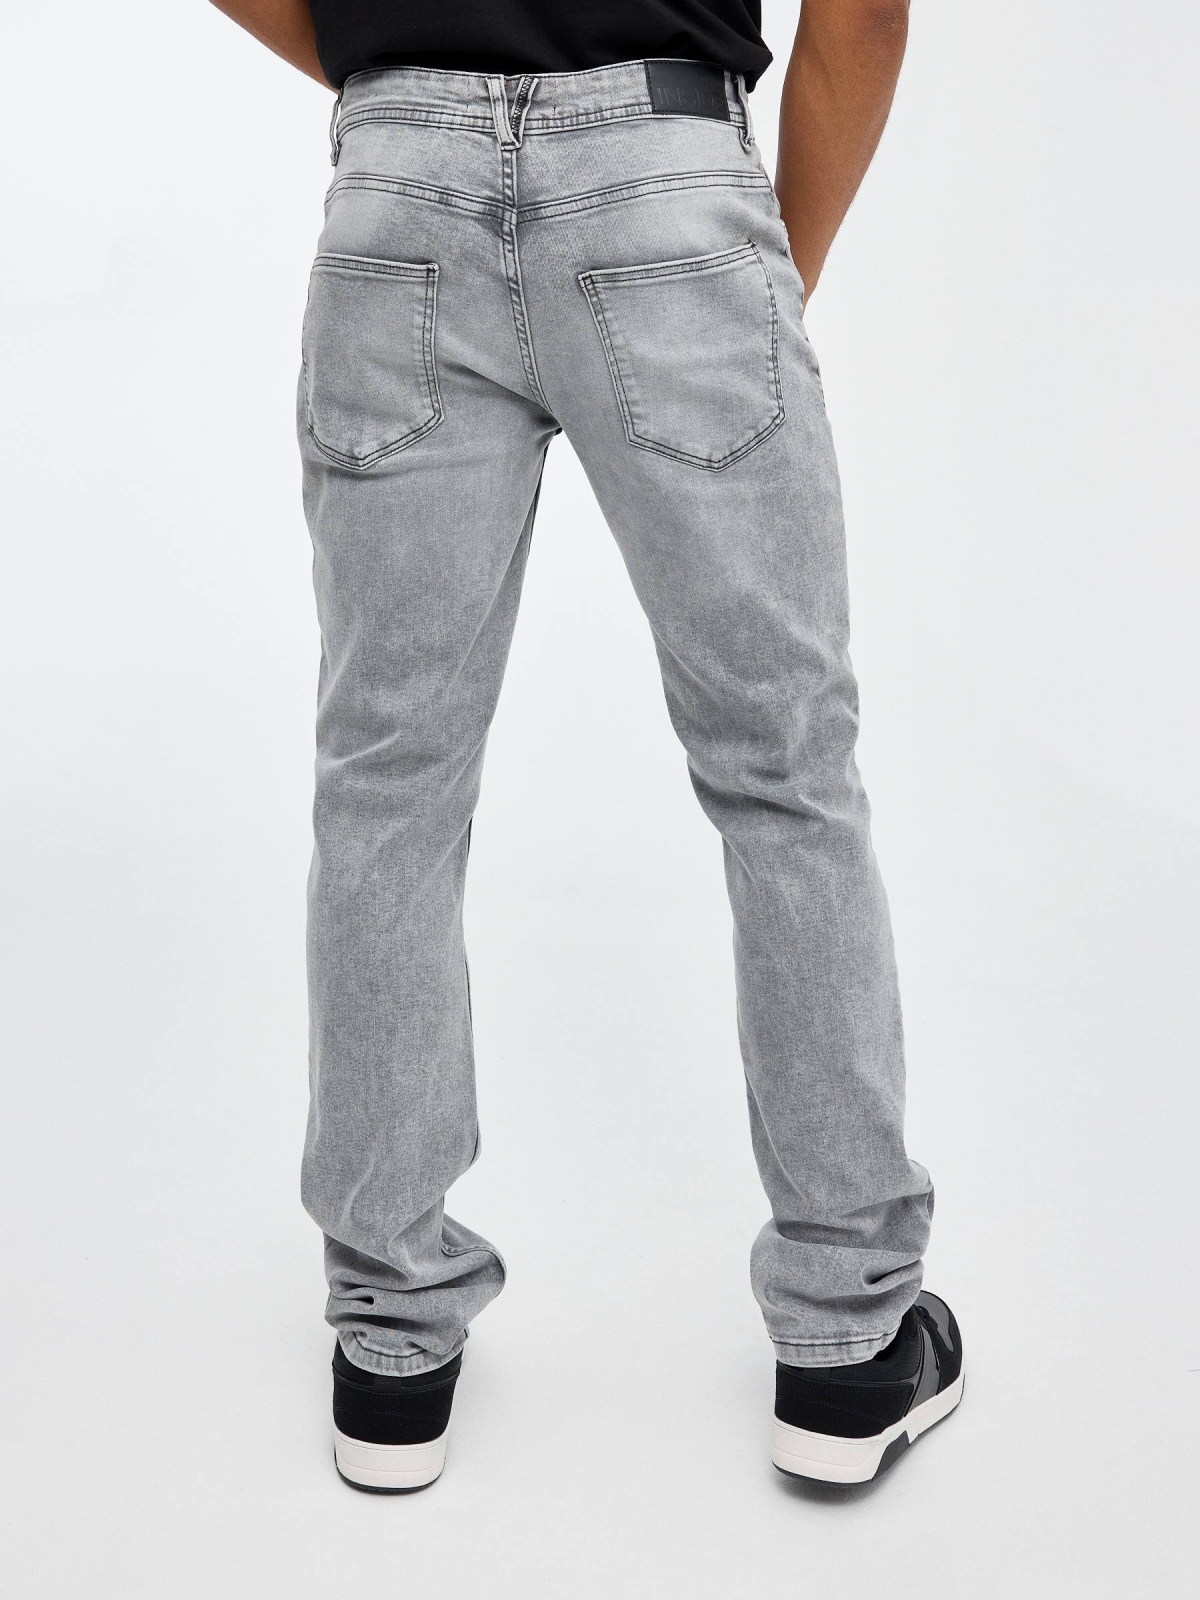 Jeans regular denim gris gris vista media trasera